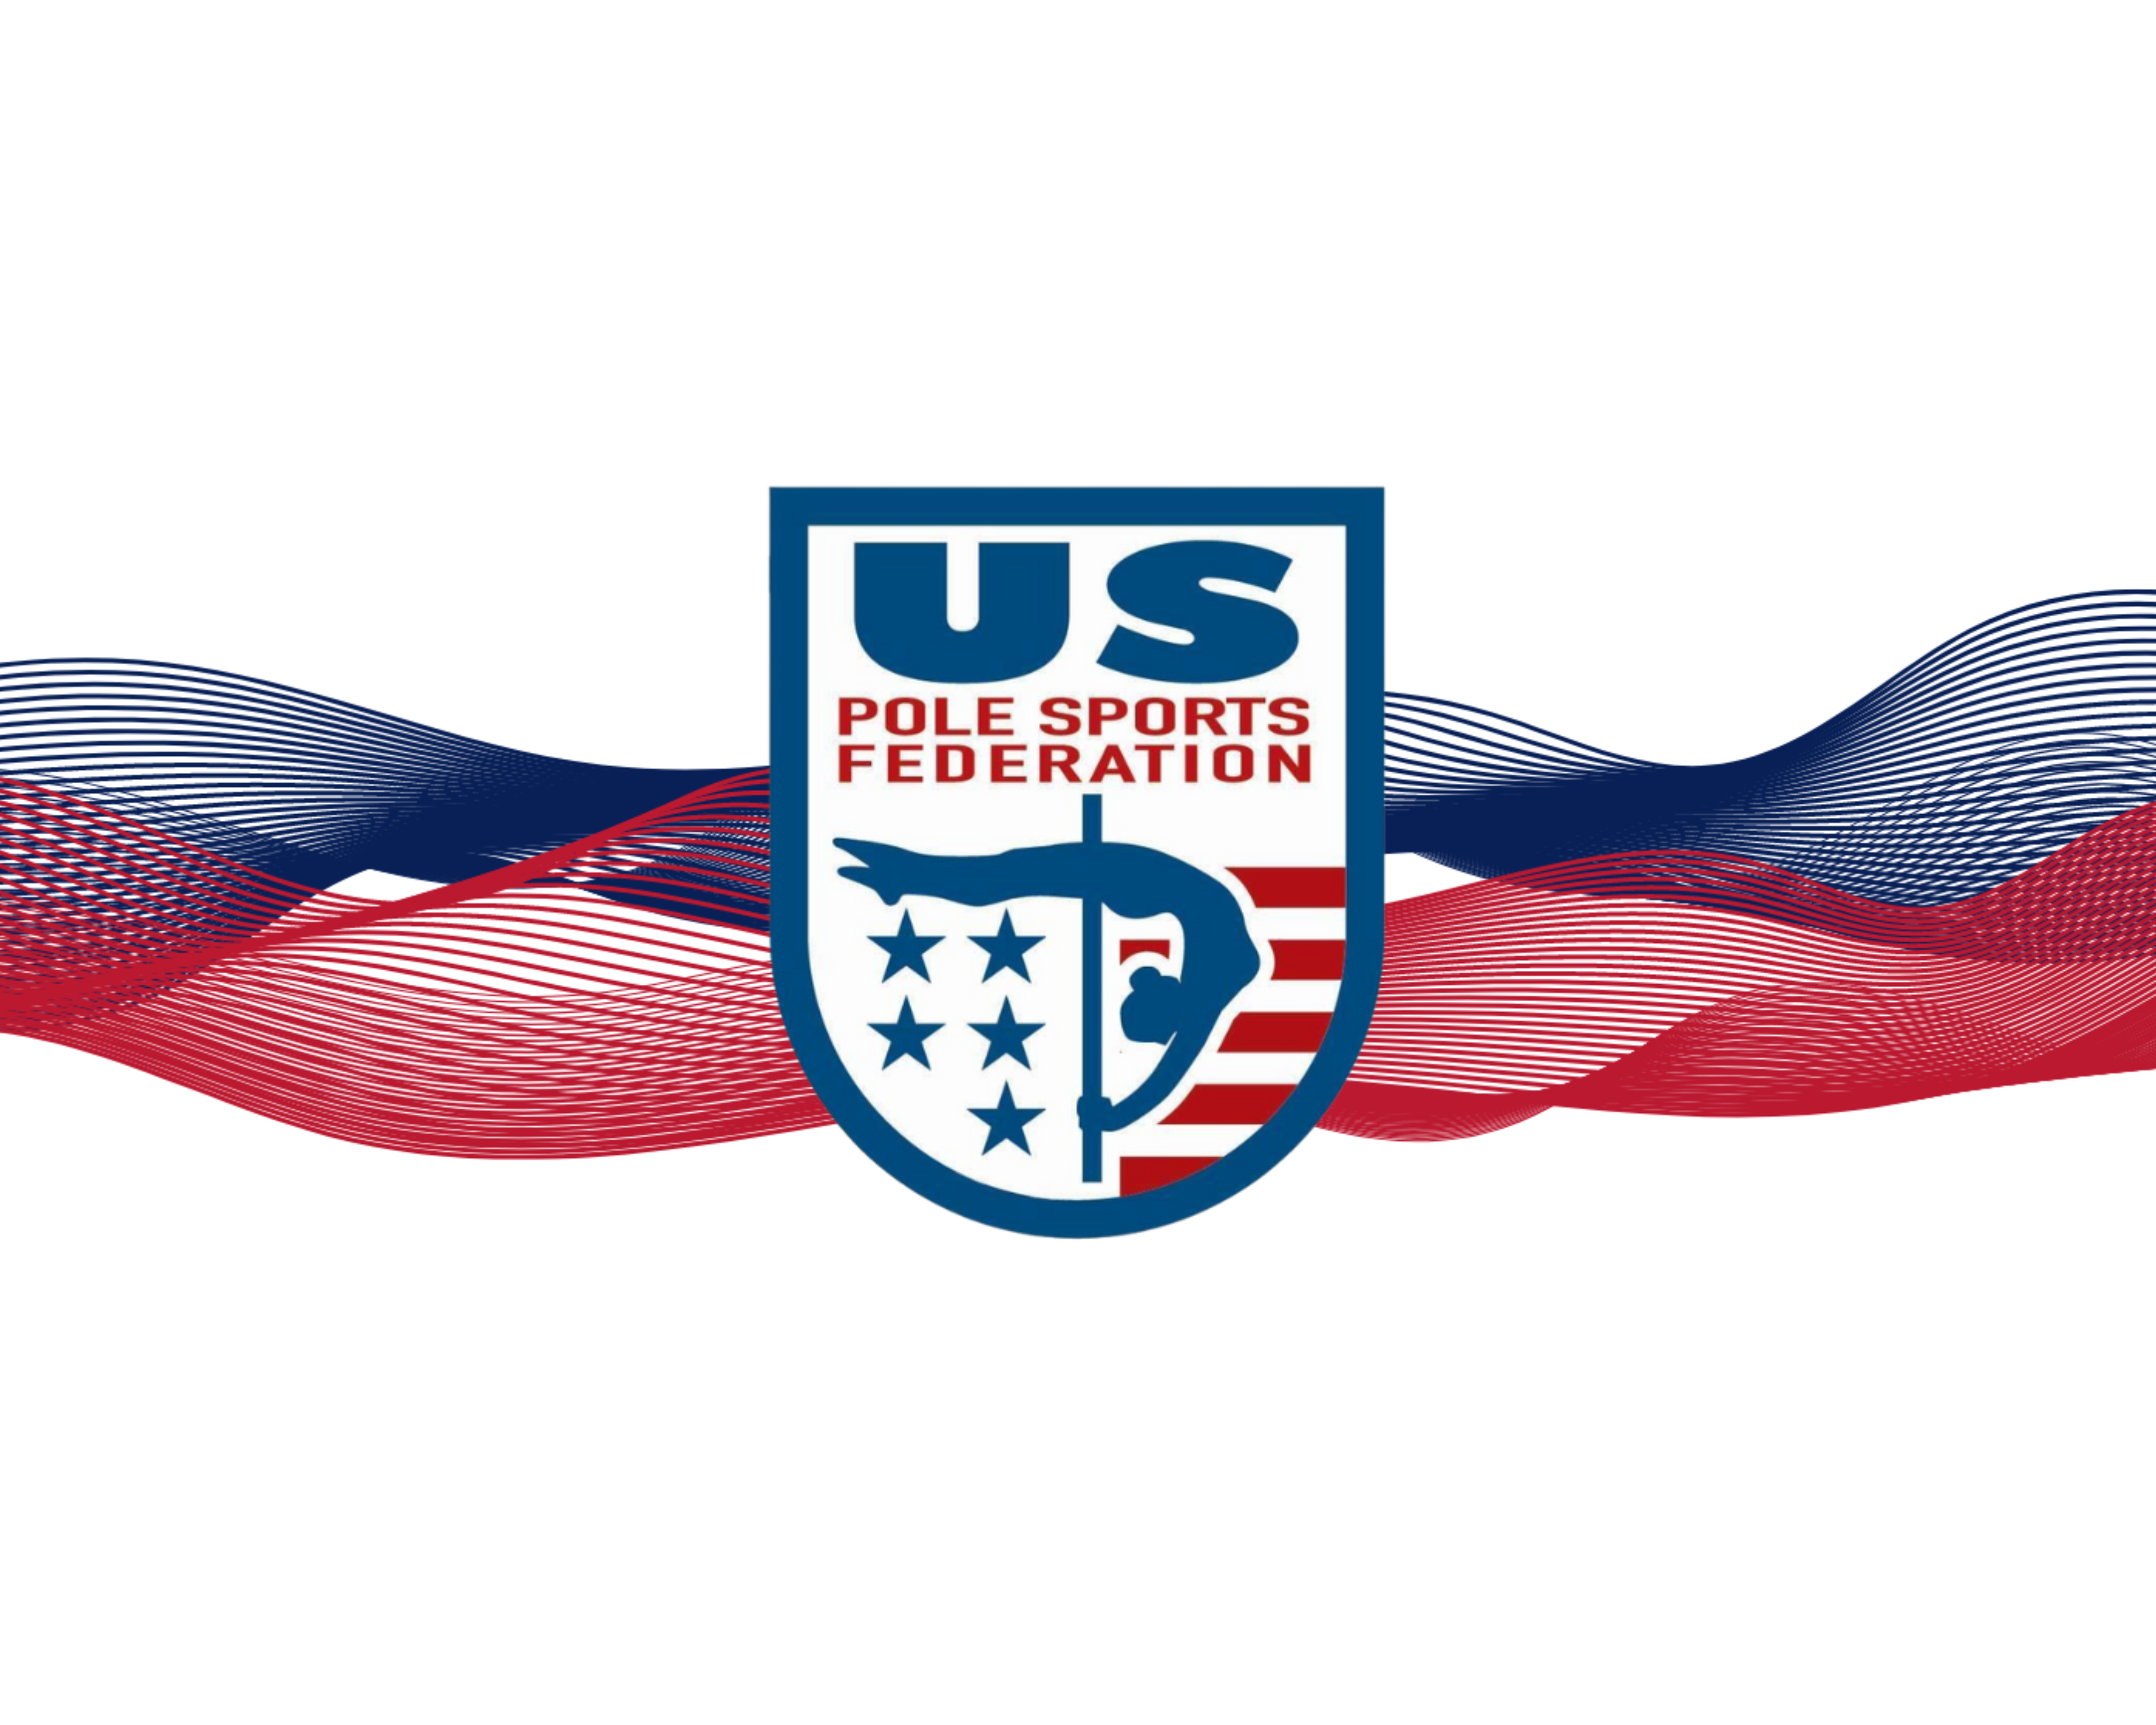 US Pole Sports Federation logo